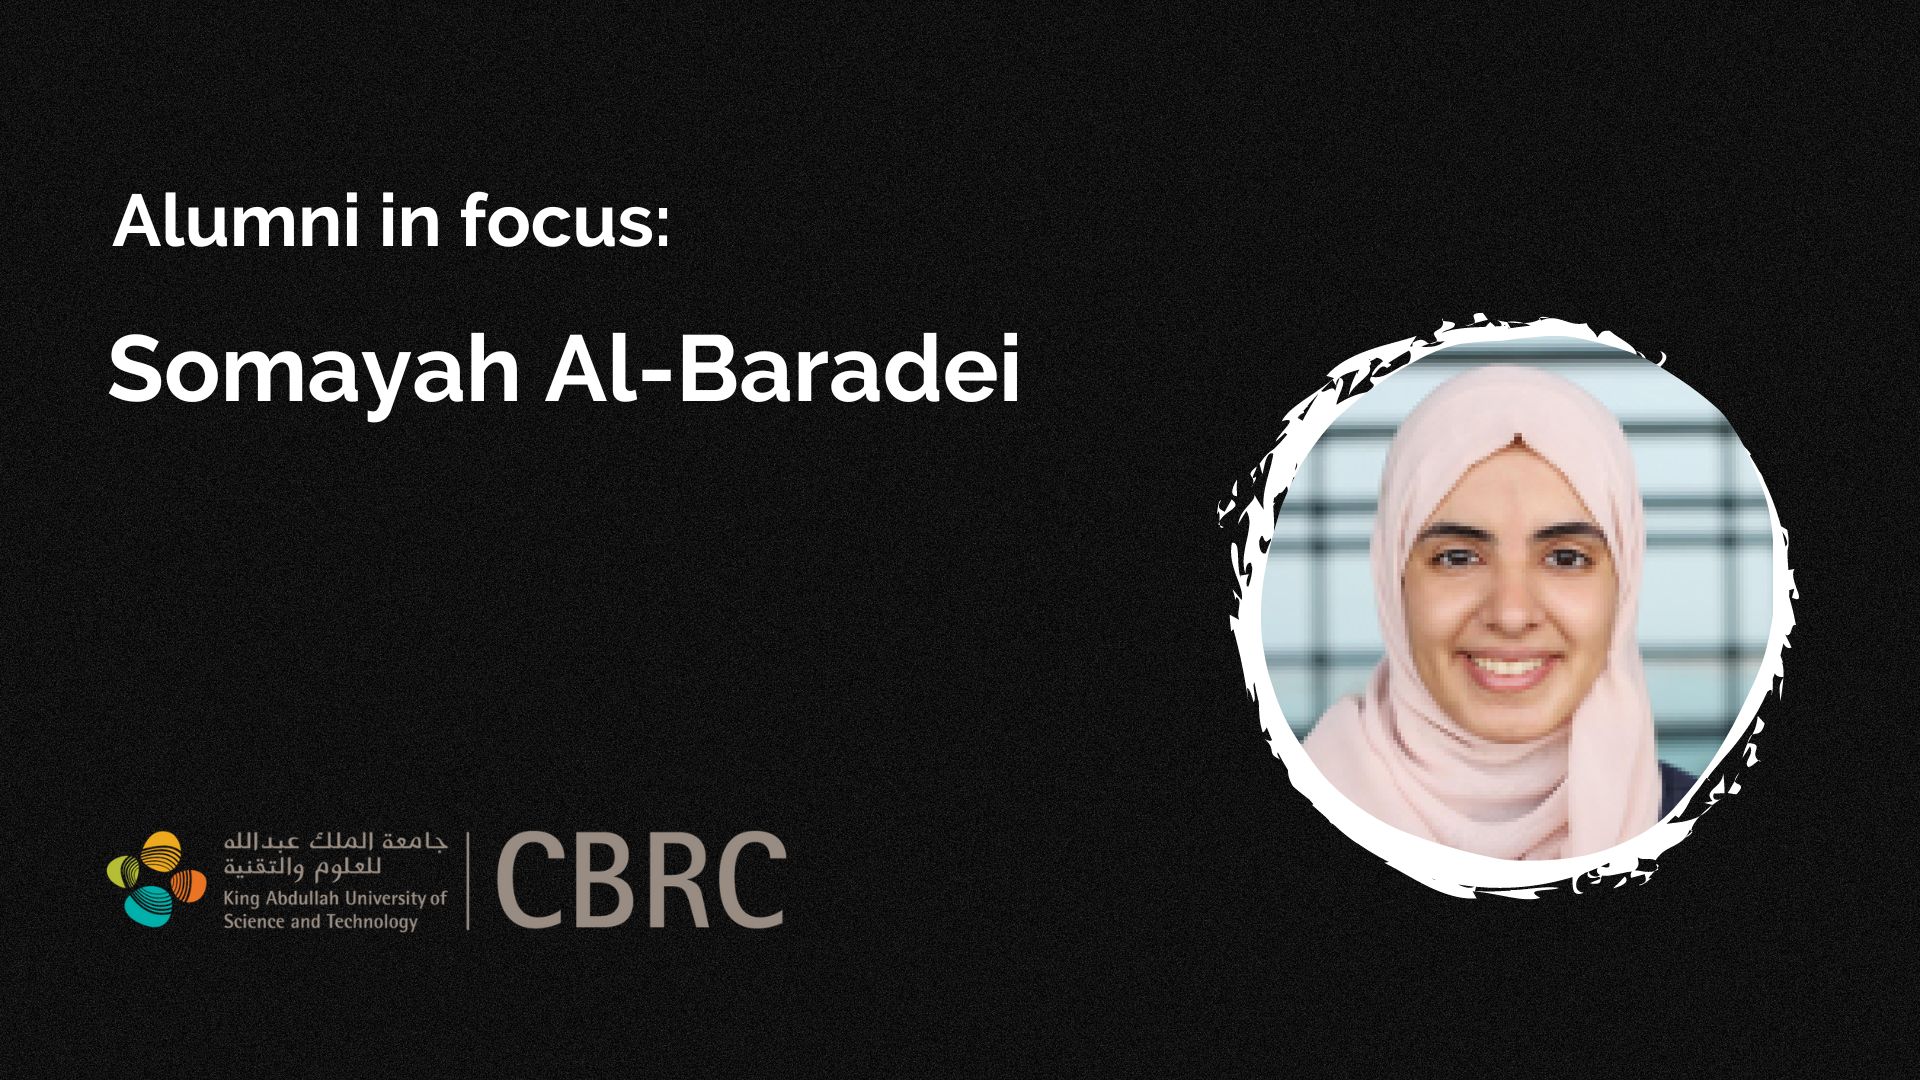 Alumni in focus: Somayah Al-Baradei